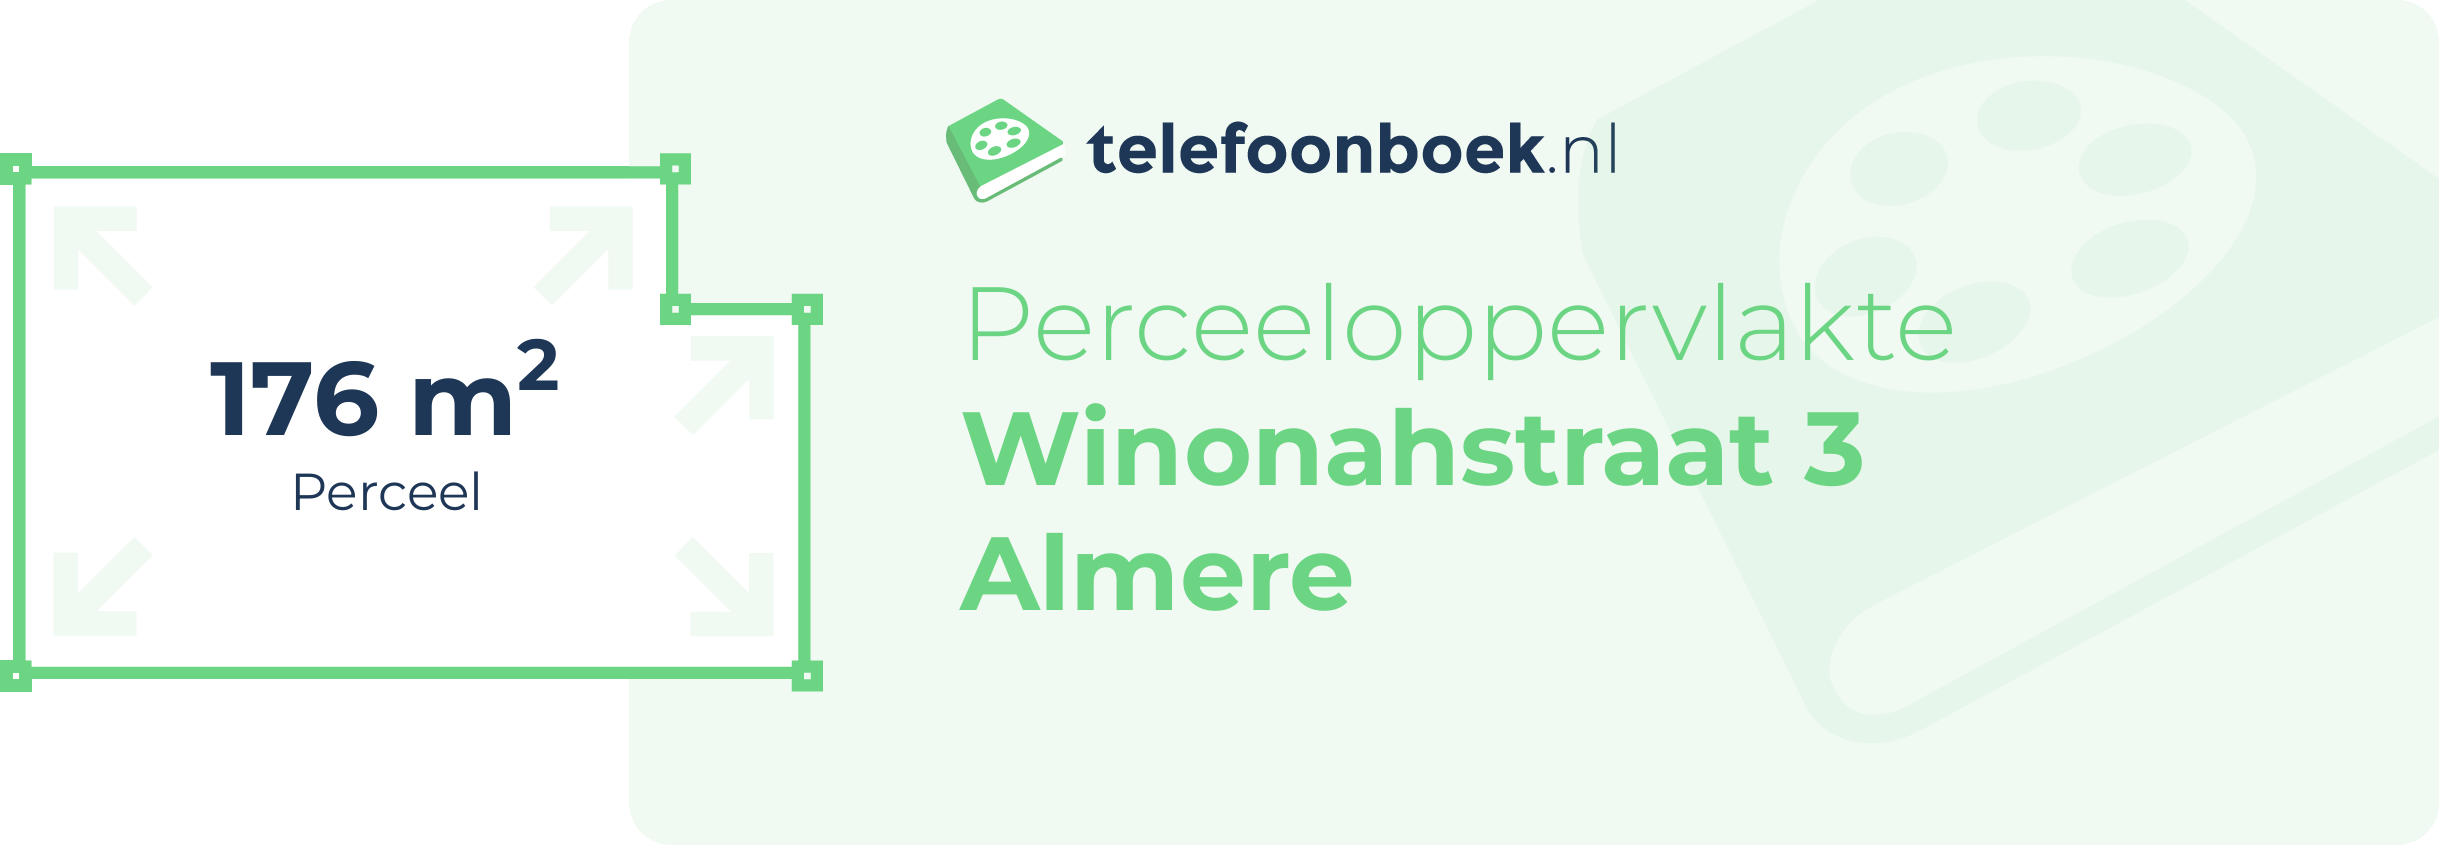 Perceeloppervlakte Winonahstraat 3 Almere